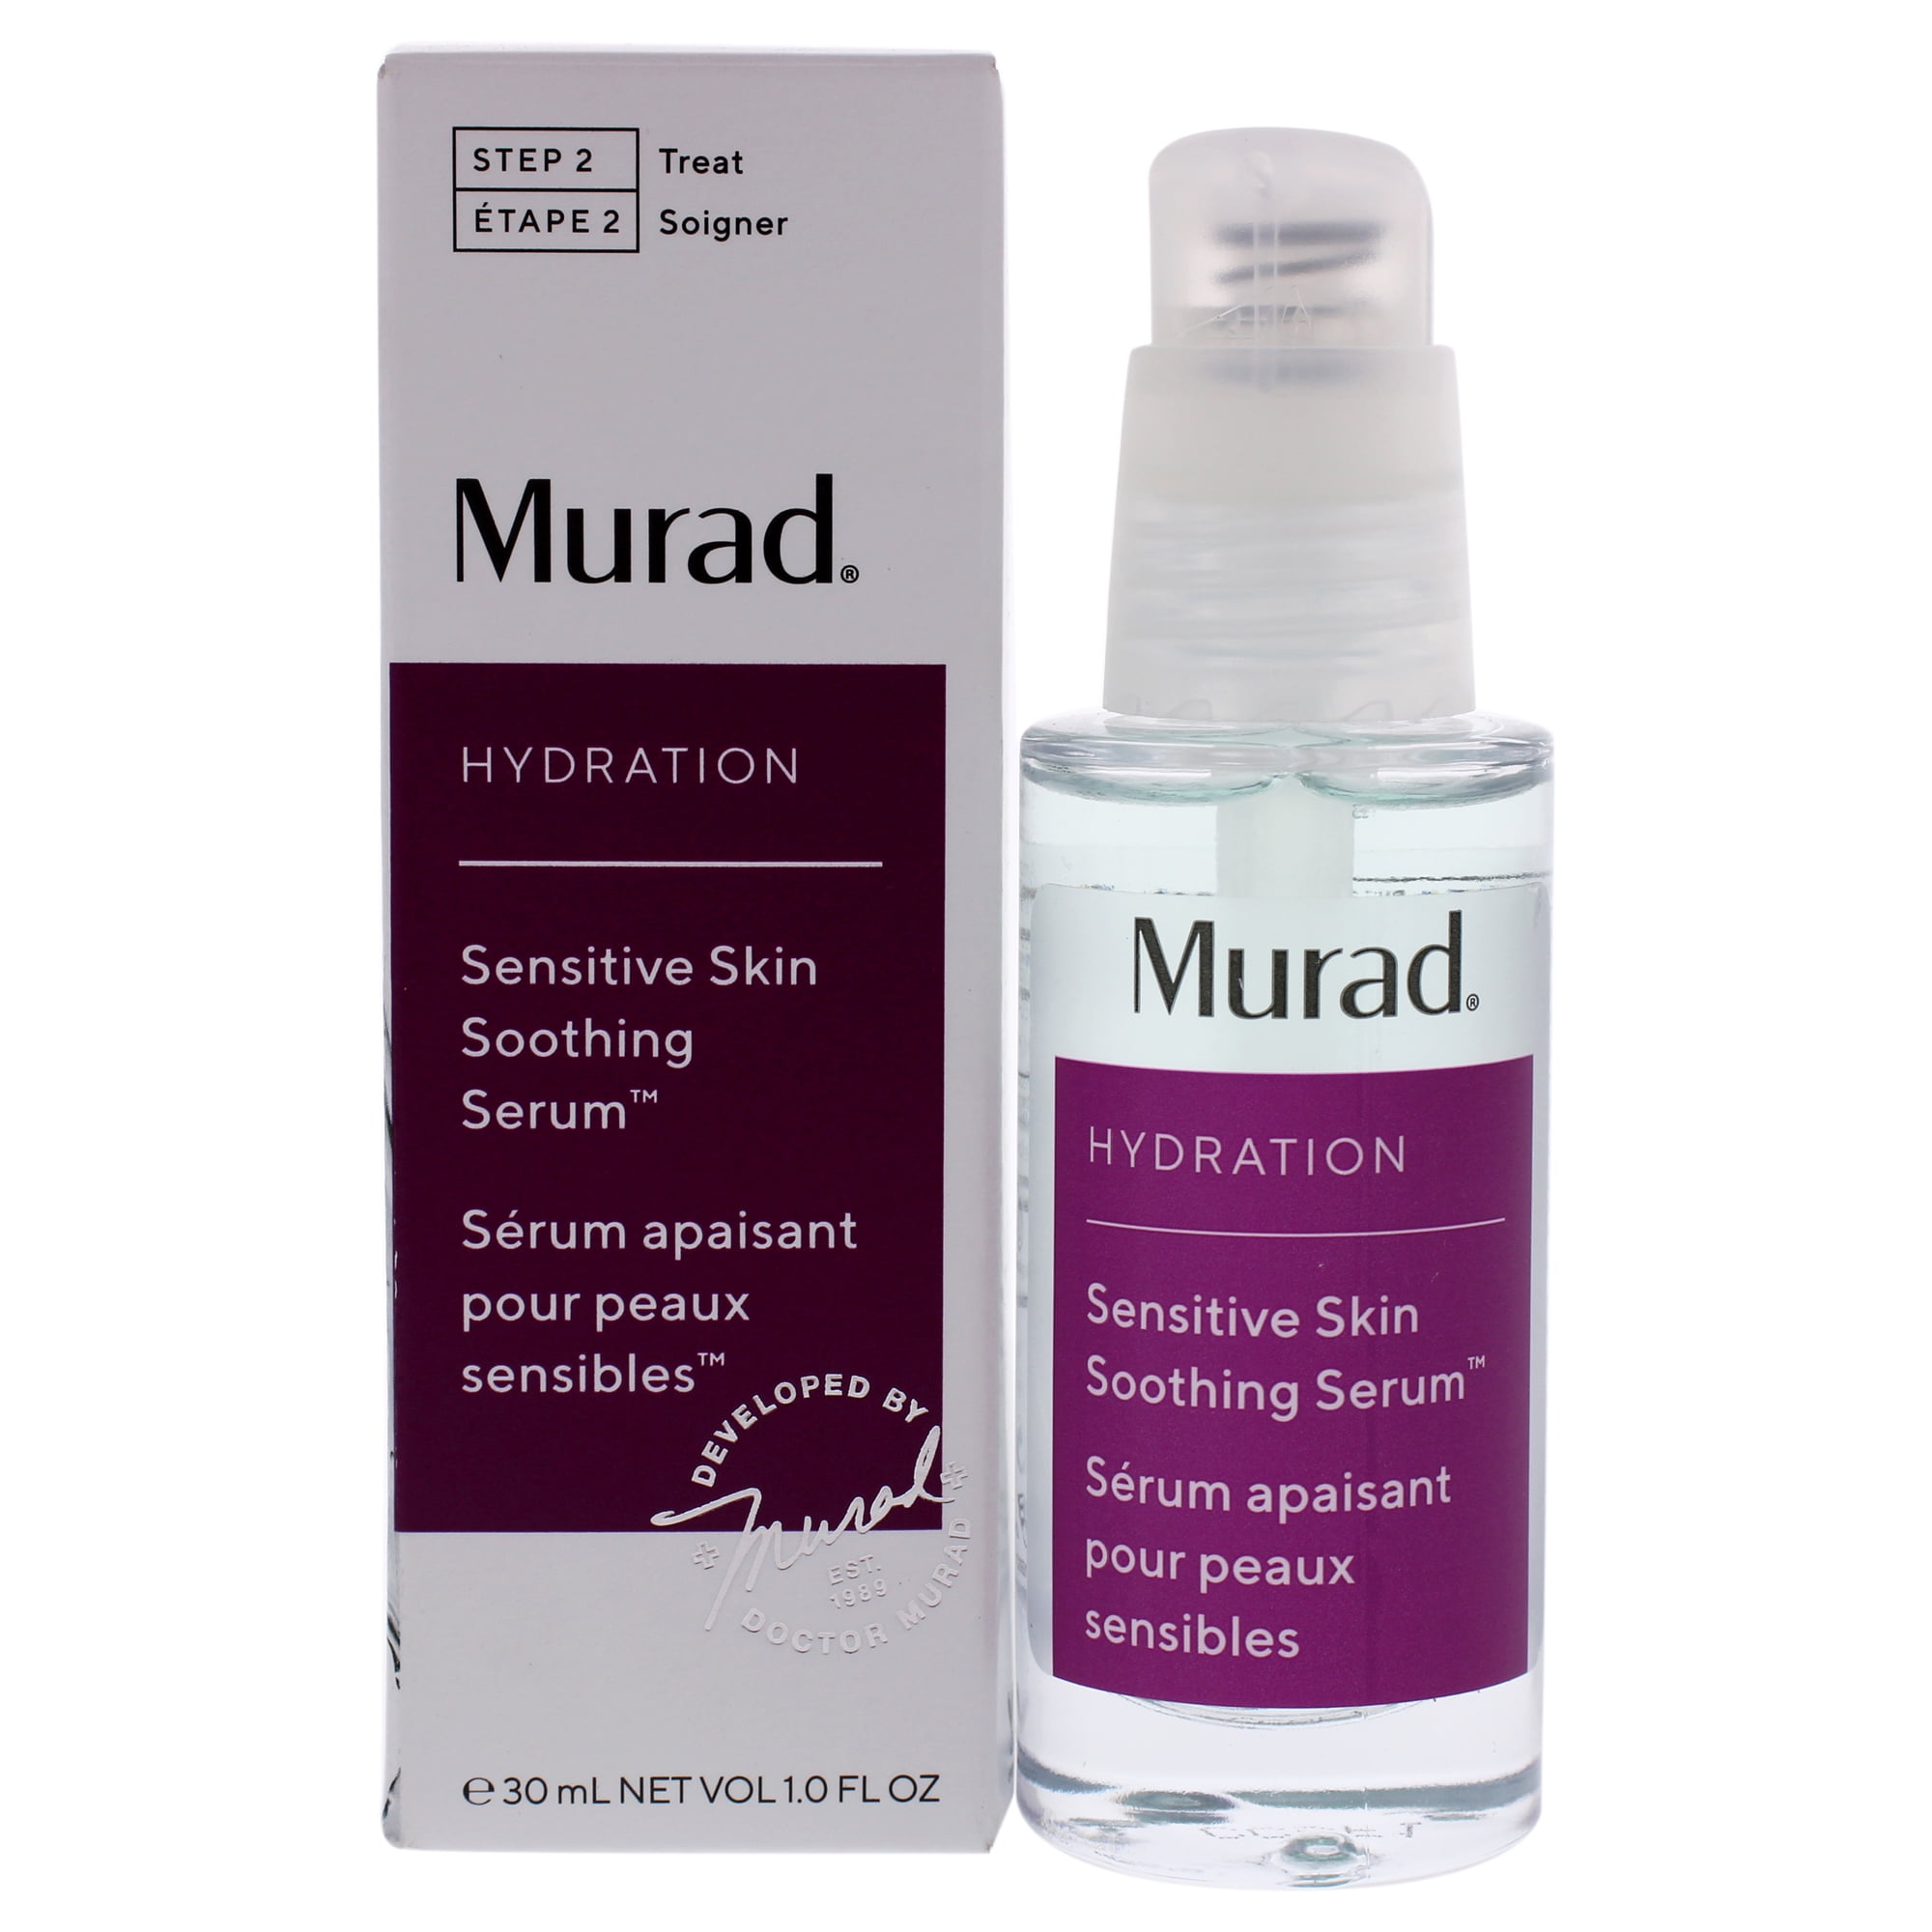 Tag ud Mod Tragisk Murad Sensitive Skin Soothing Serum - Walmart.com